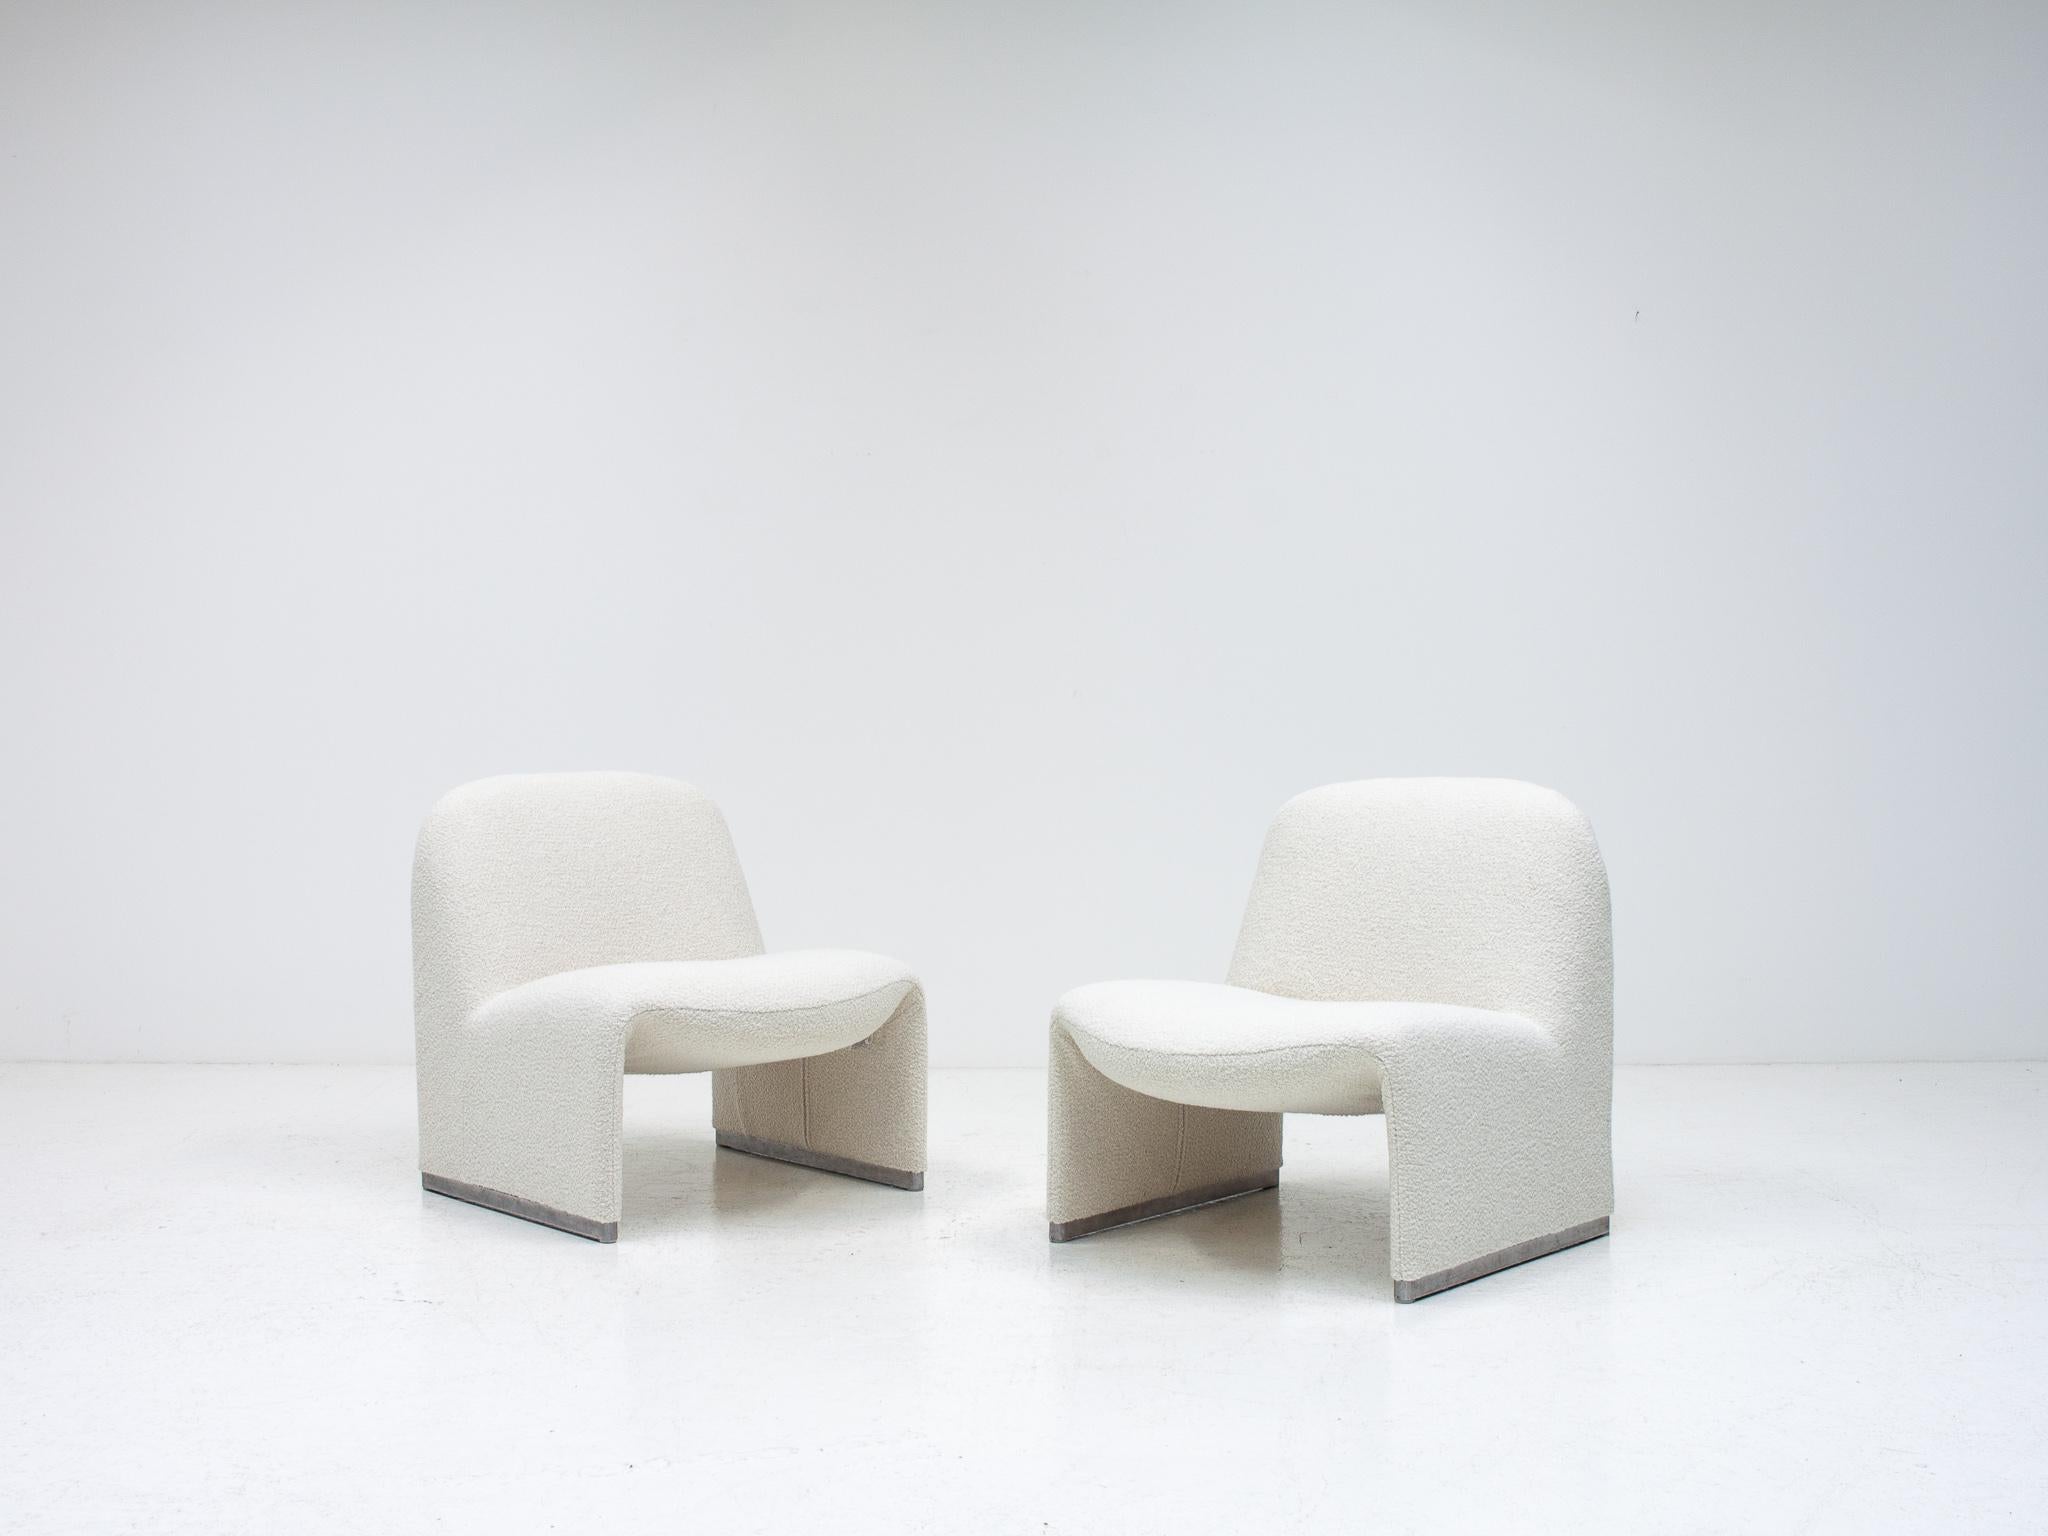 Dutch Giancarlo Piretti “Alky” Chairs In Yarn Collective bouclé *Customizable*